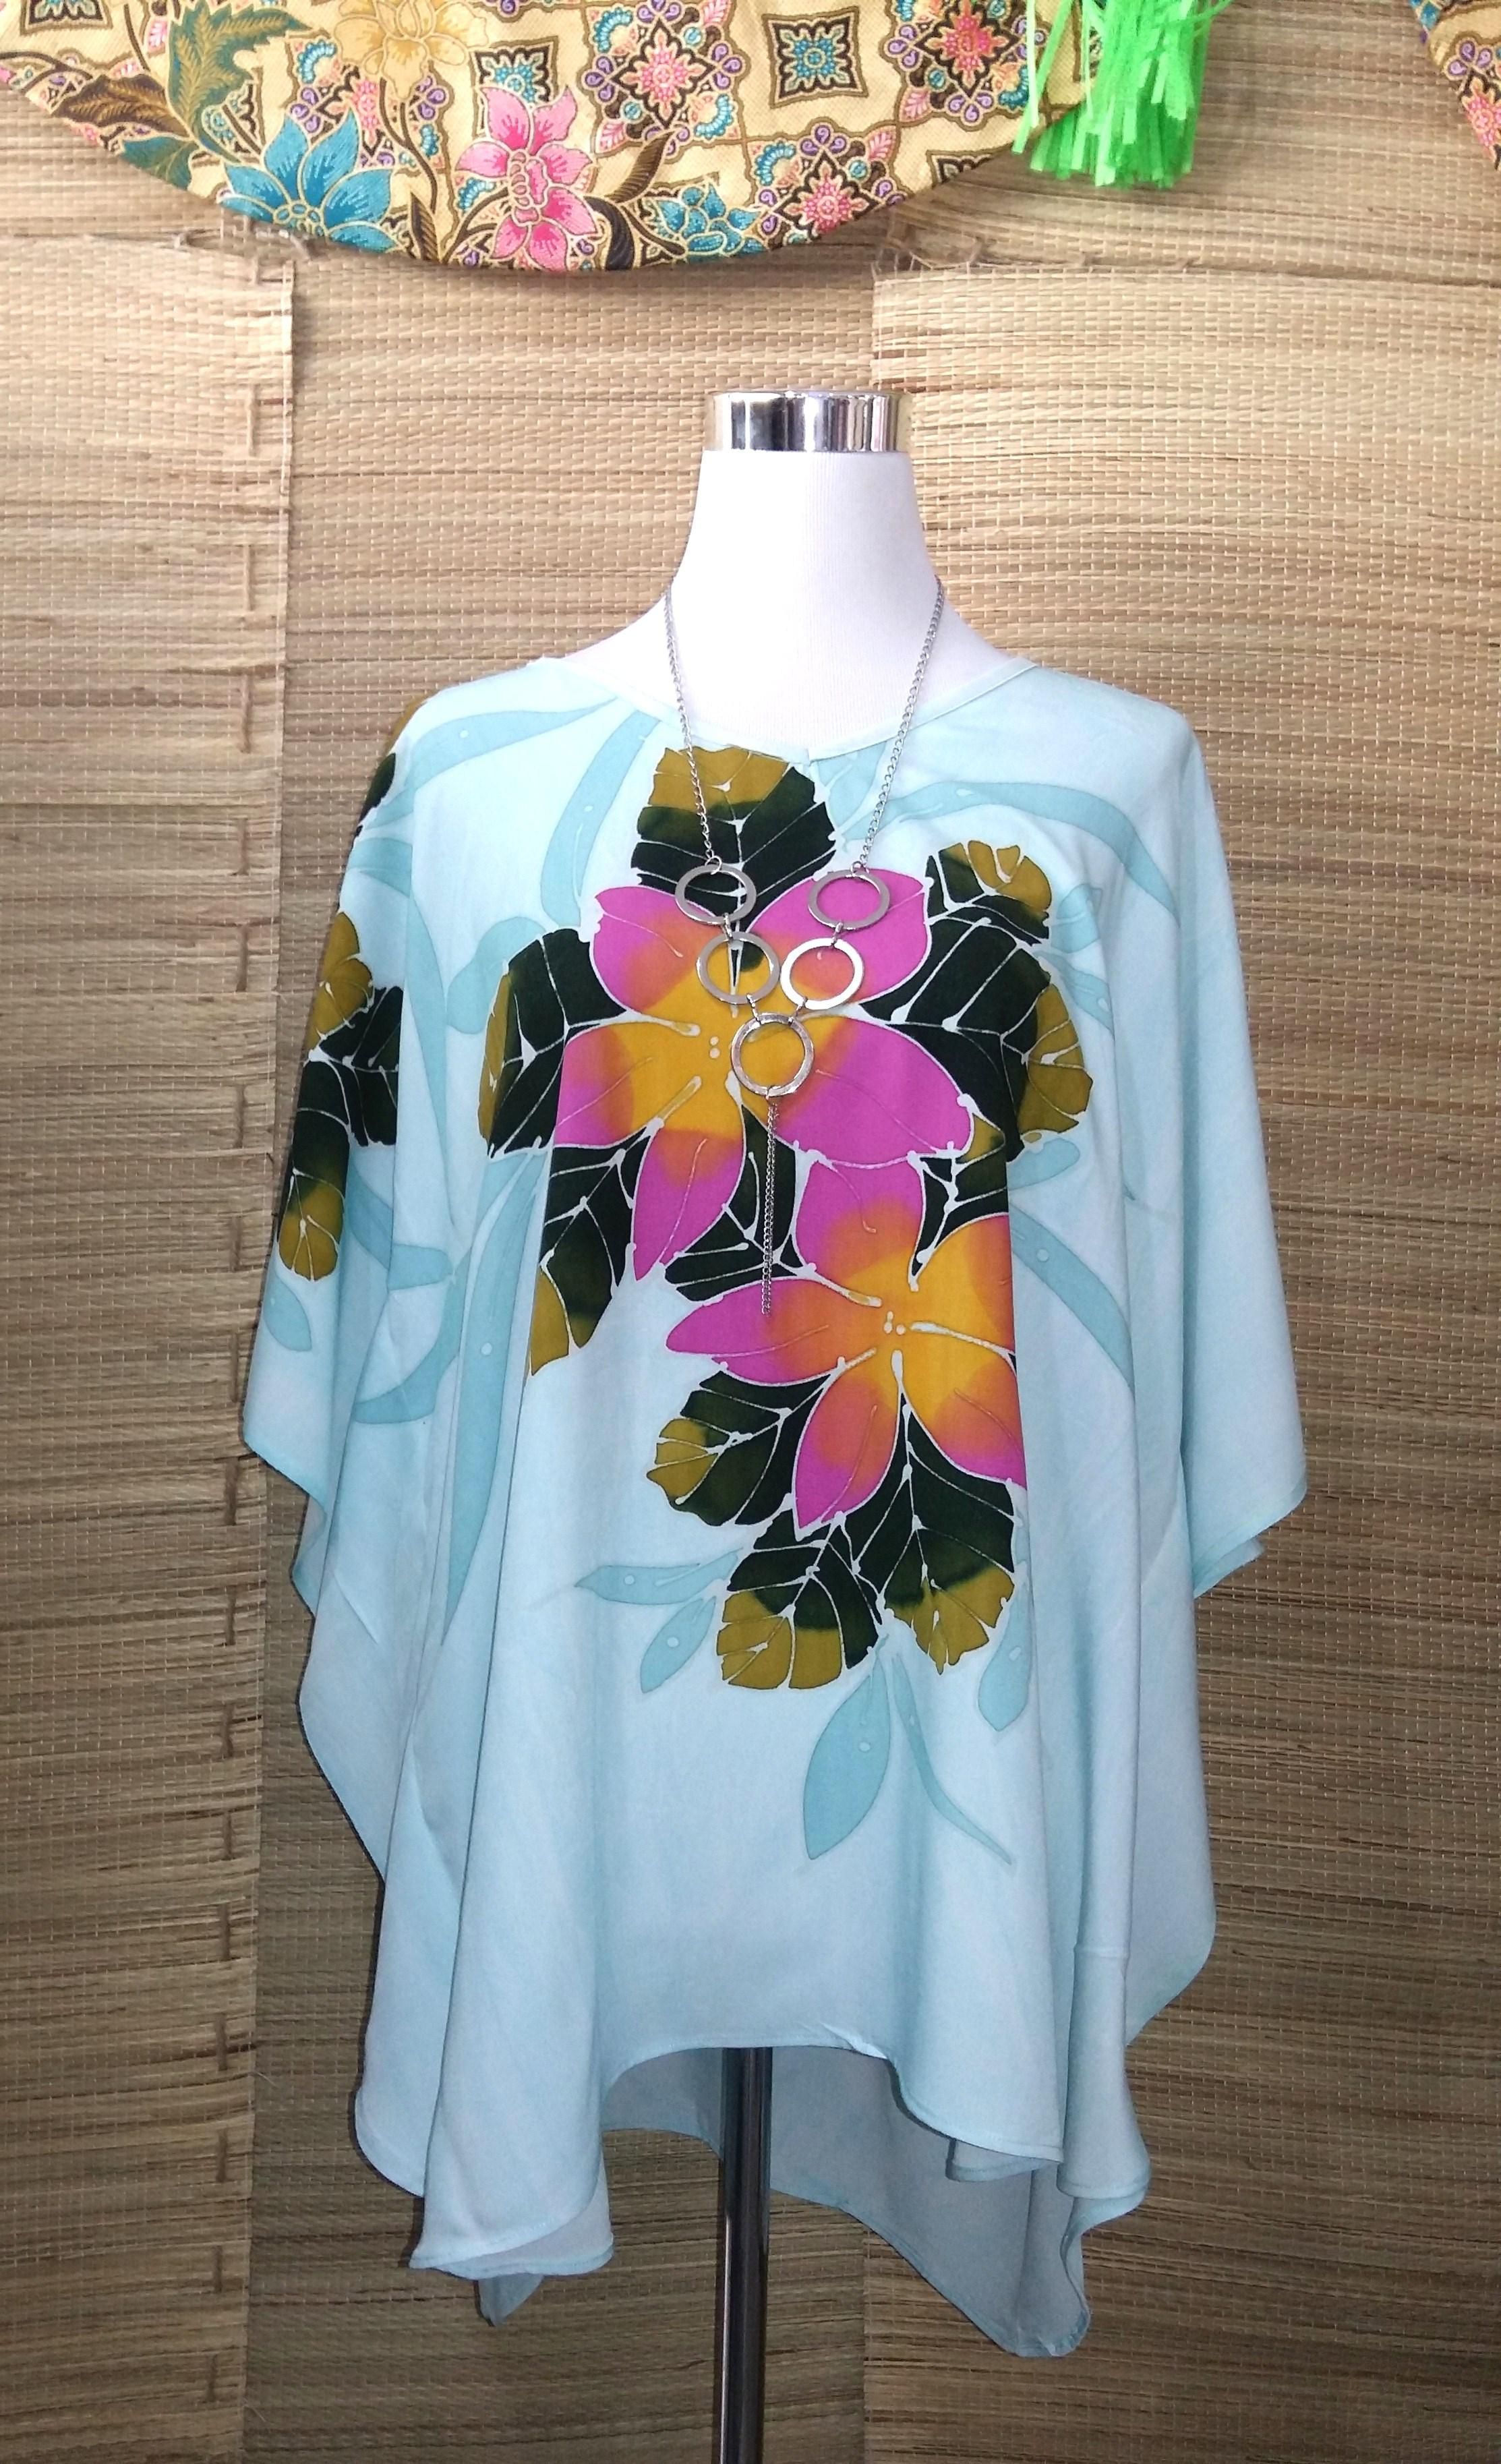 Lady Casual Short Kaftan - Poncho Blouse – Handrawn-Span Cotton - One size (Light Blue)